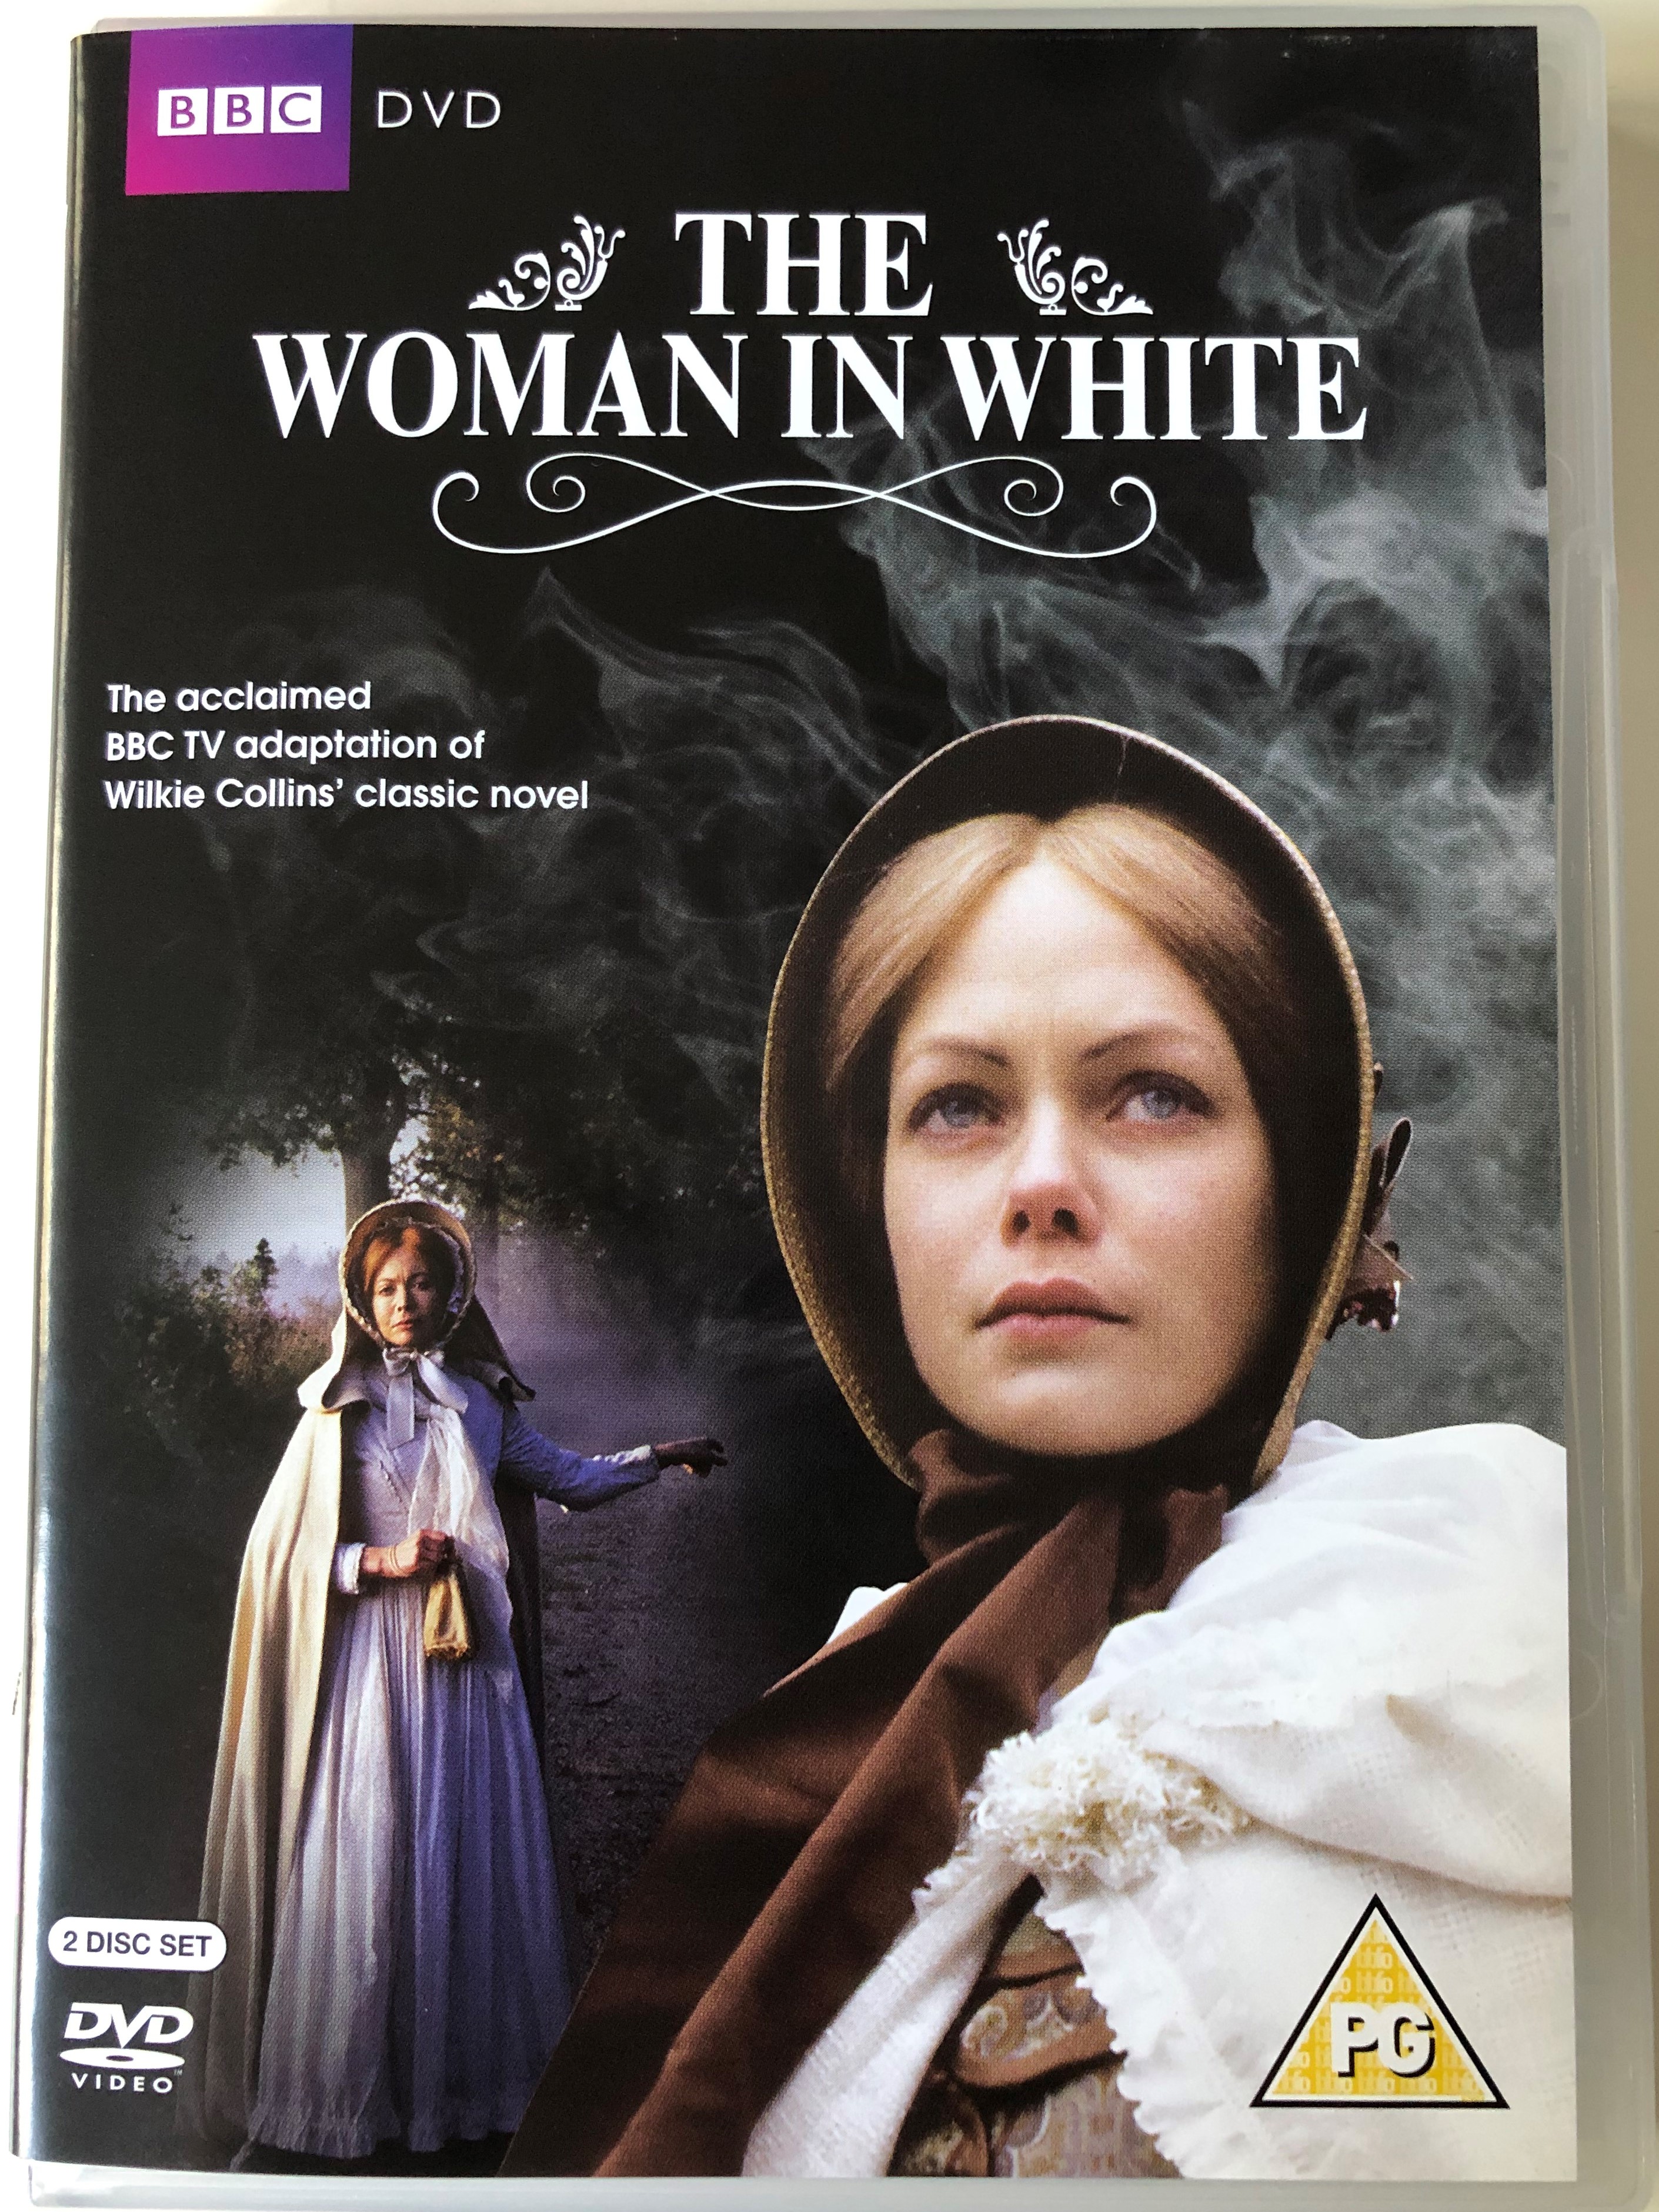 The Woman in White 2x DVD 1982 / BBC / Directed by John Bruce / Starring:  Diana Quick, Ian Richardson, Jenny Seagrove, John Shrapnel, Kevin Elyot,  Daniel Gerroll - bibleinmylanguage